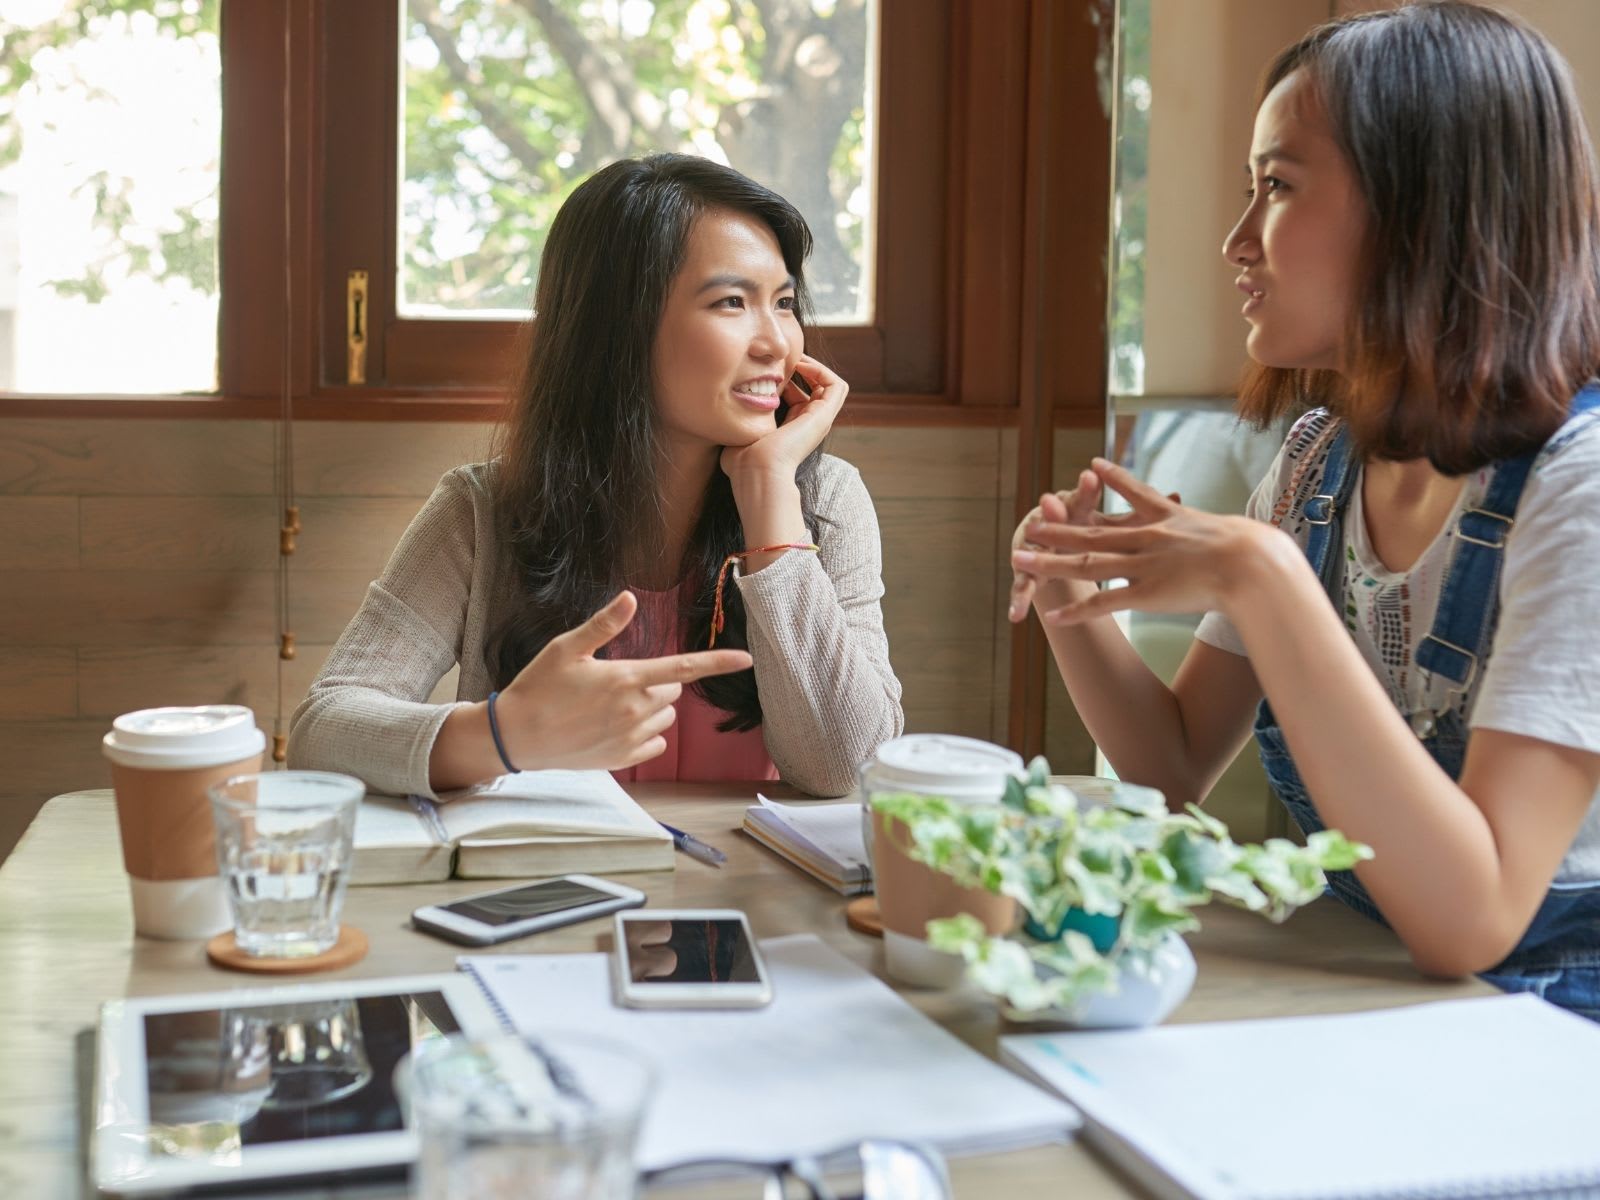 Two female students conversing inside a café